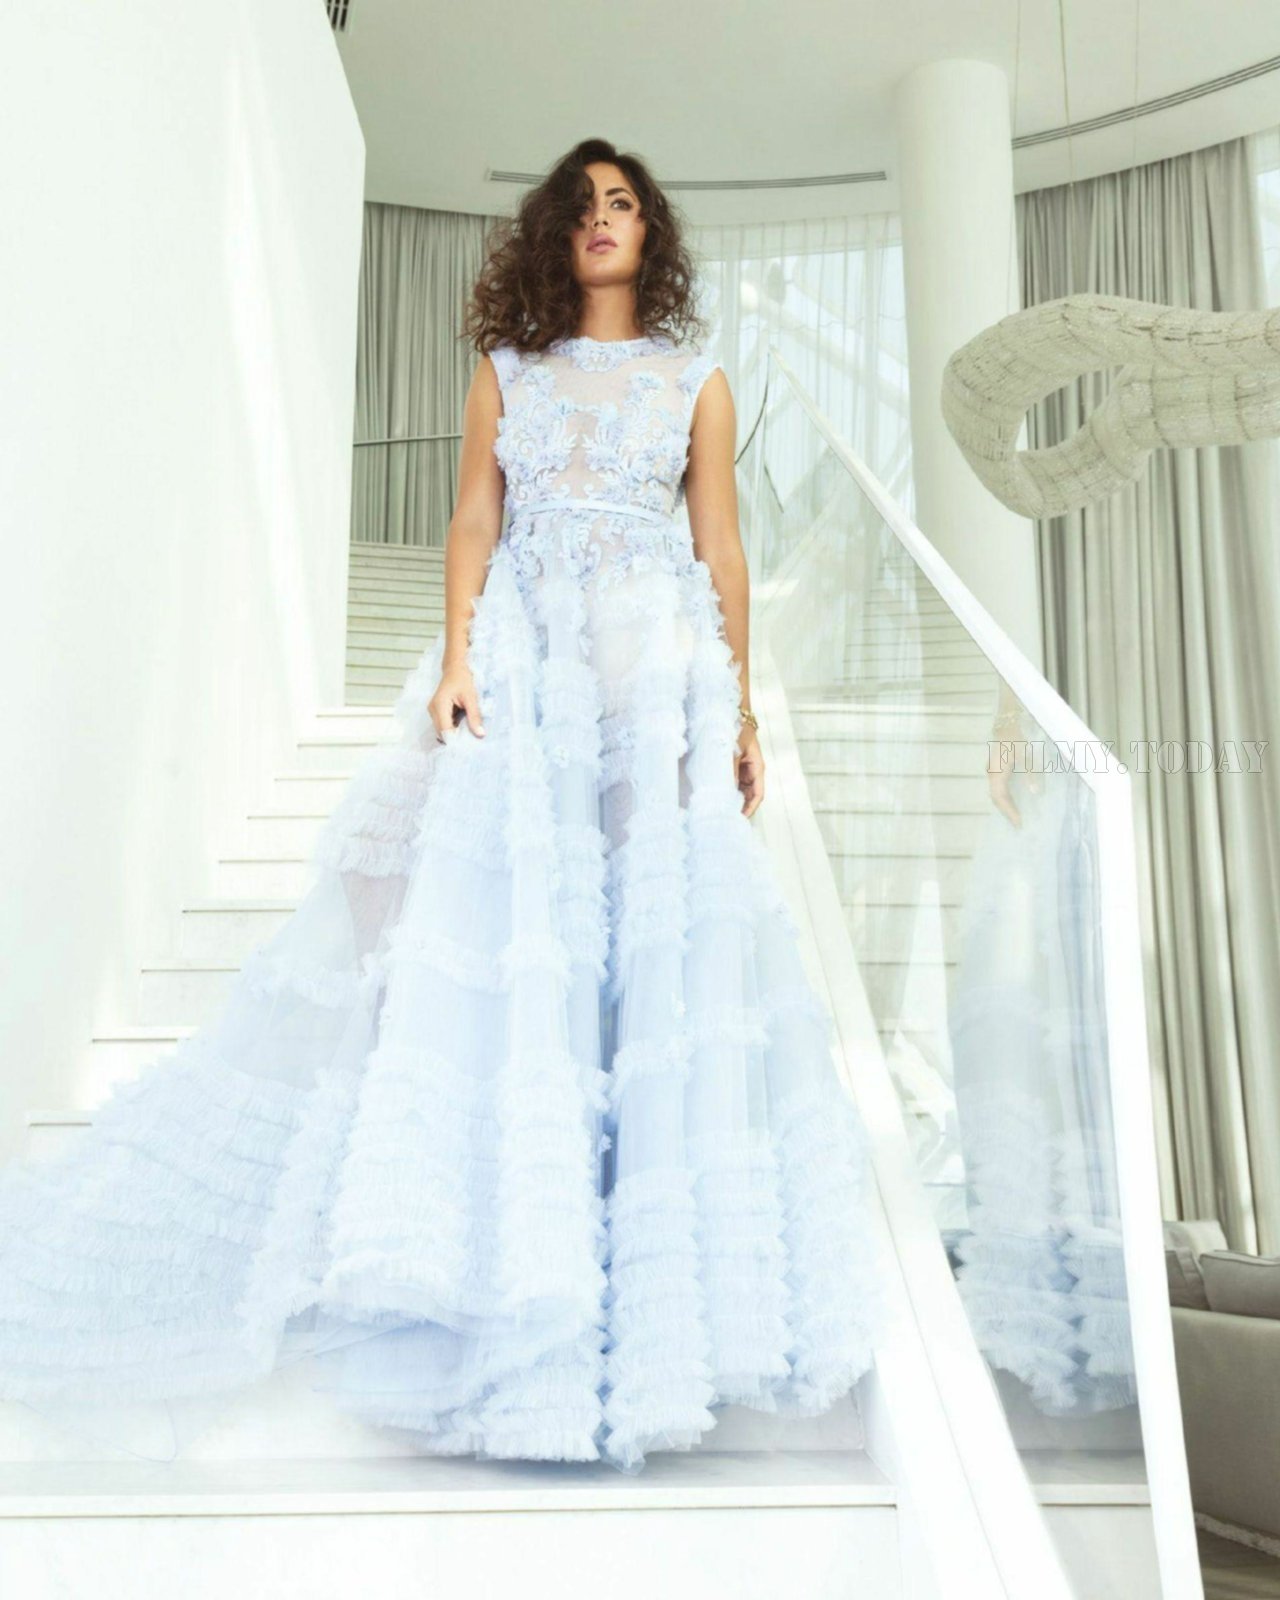 Katrina Kaif For Harper’s Bazaar Bride India October 2017 Photoshoot | Picture 1577456